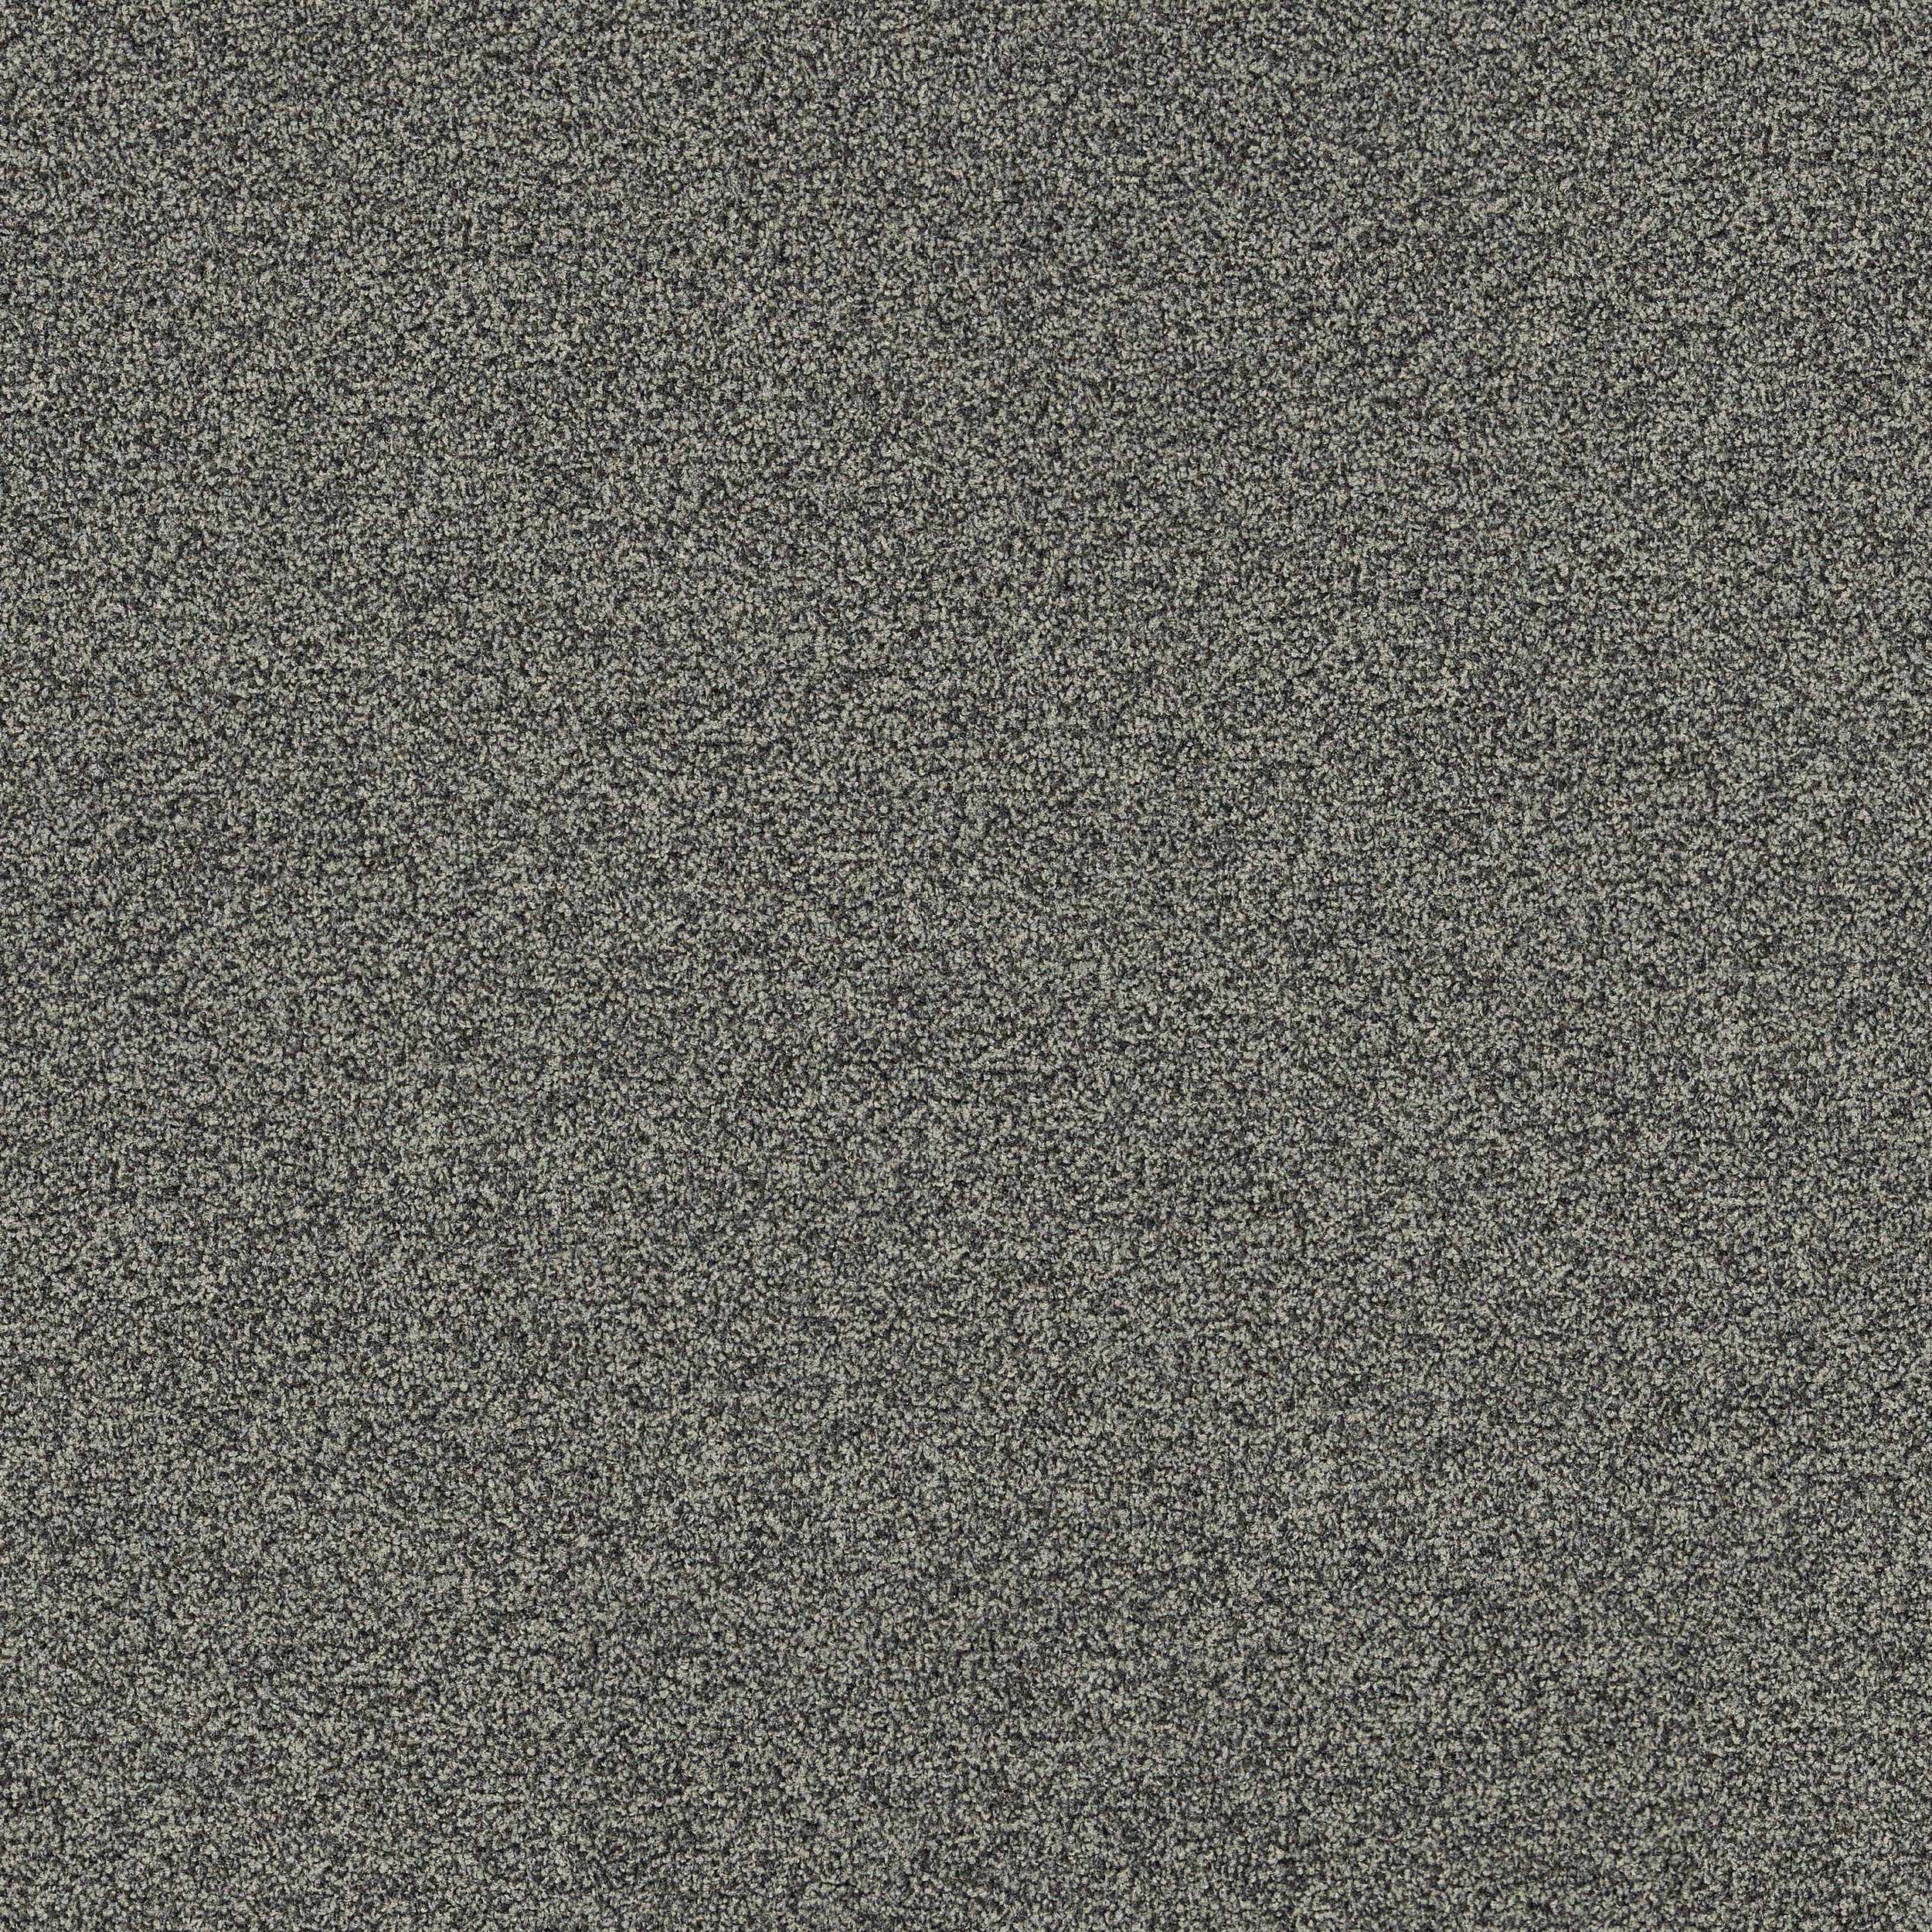 Polichrome Stipple Carpet Tile In Moonrock número de imagen 2